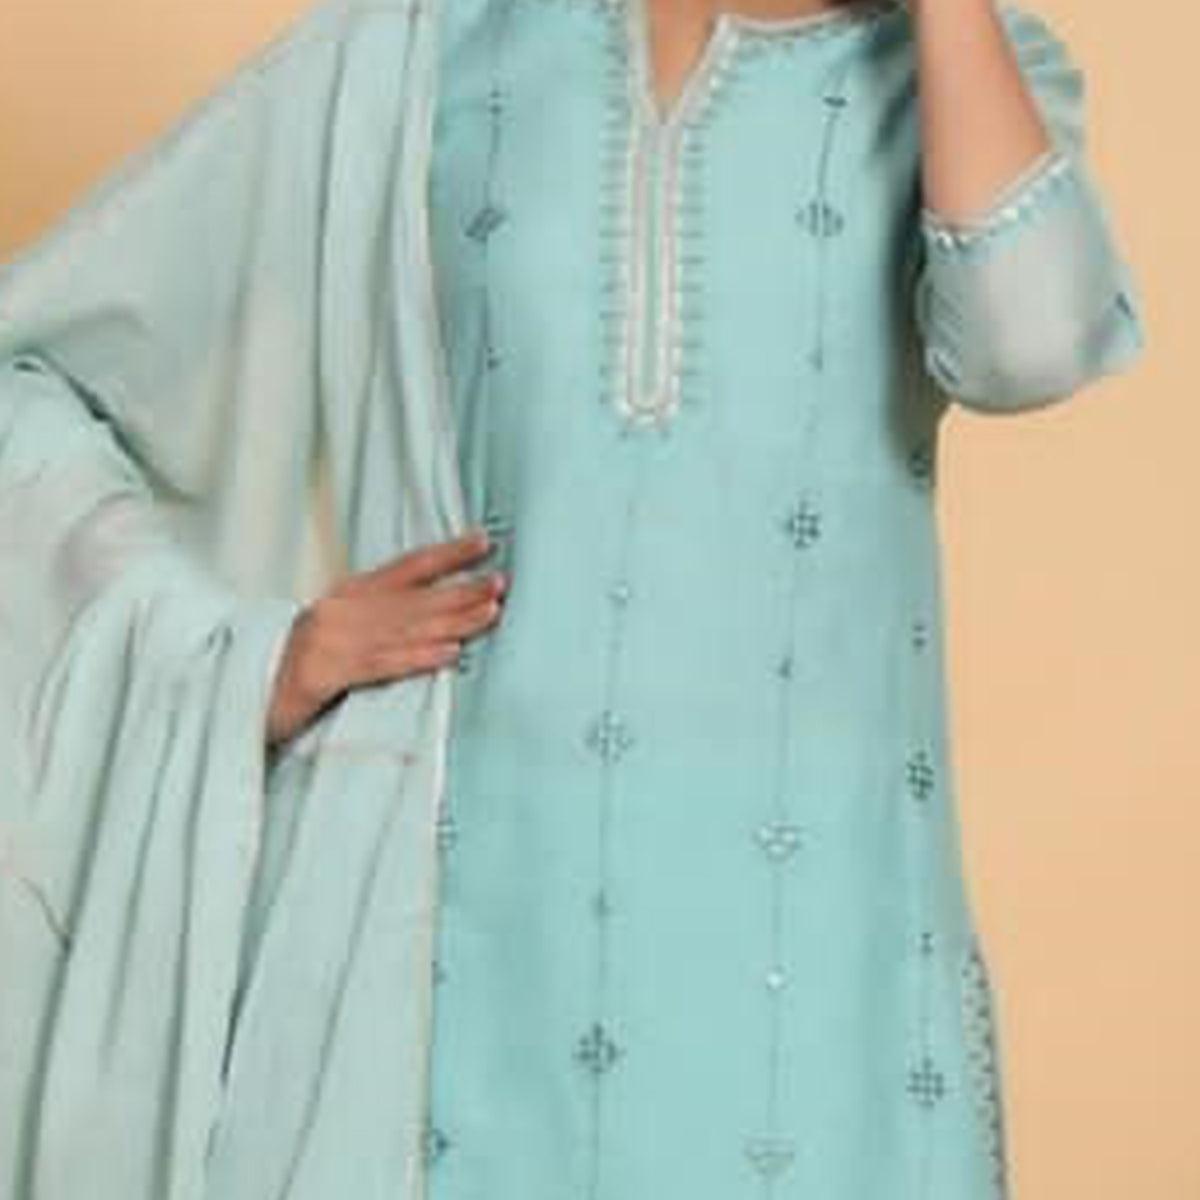 Aariya Designs - Aqua Blue Coloured Party Wear Embroidered Cotton Silk Kurti-Sharara Set With Dupatta - Peachmode